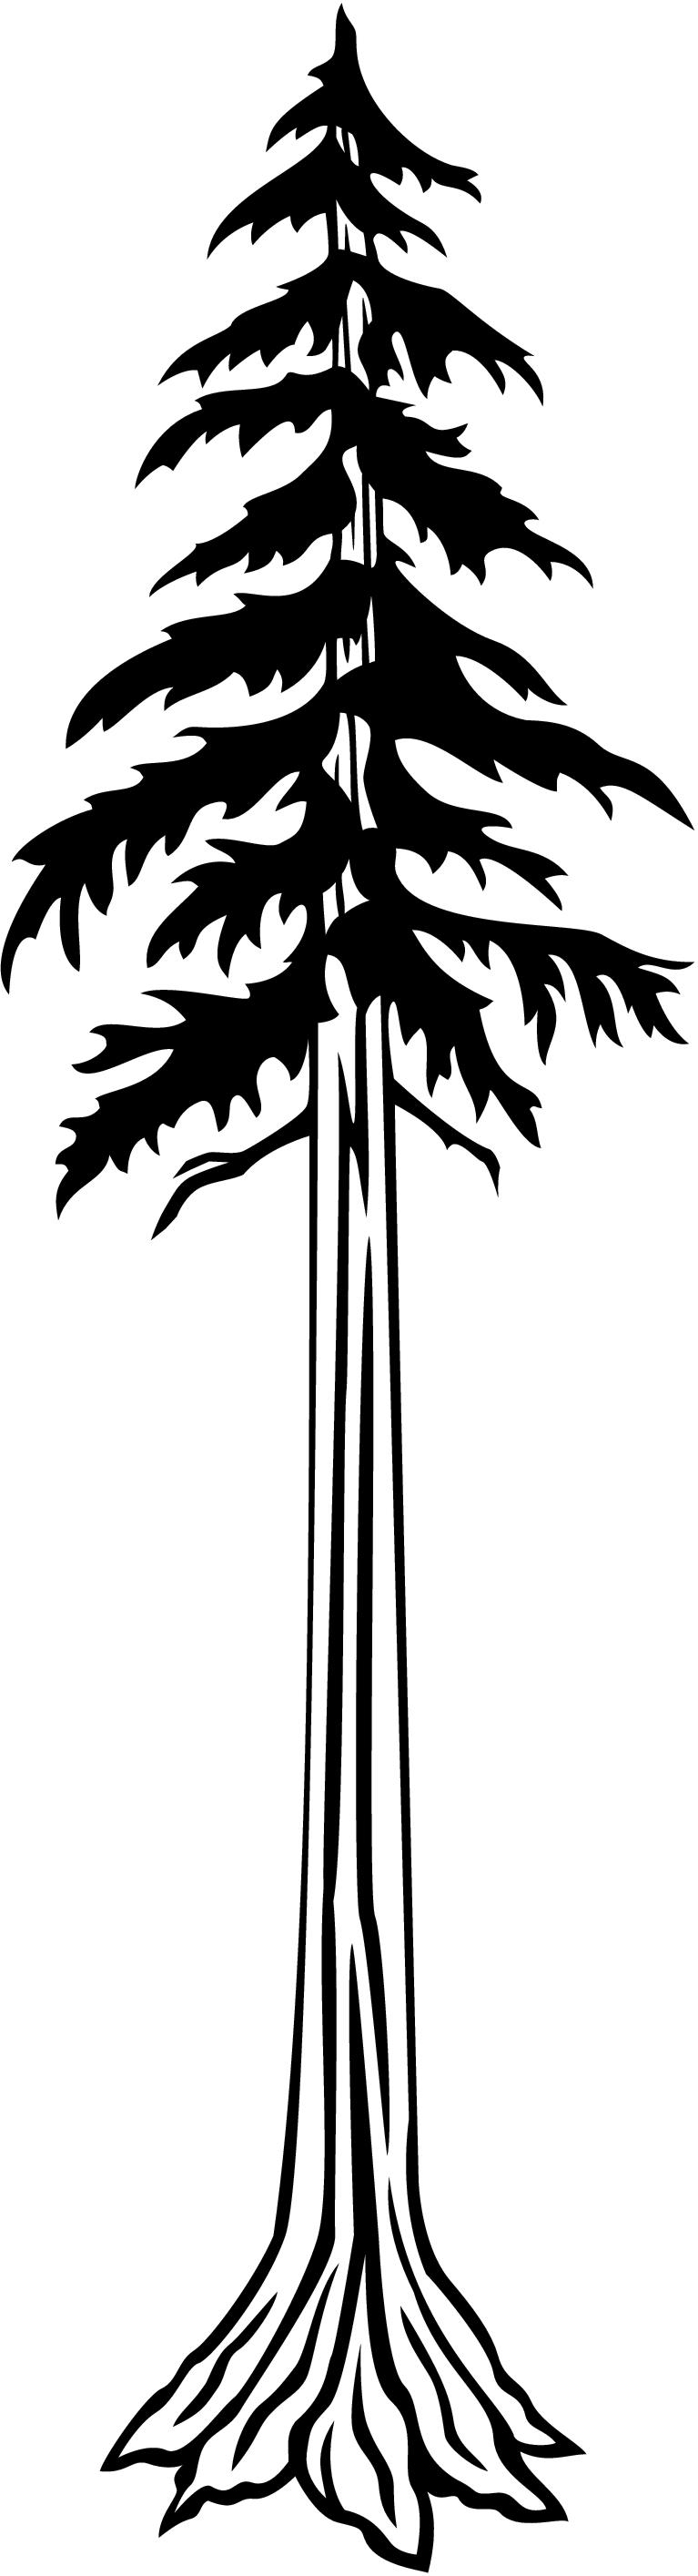 Images For > Redwood Tree Illustration